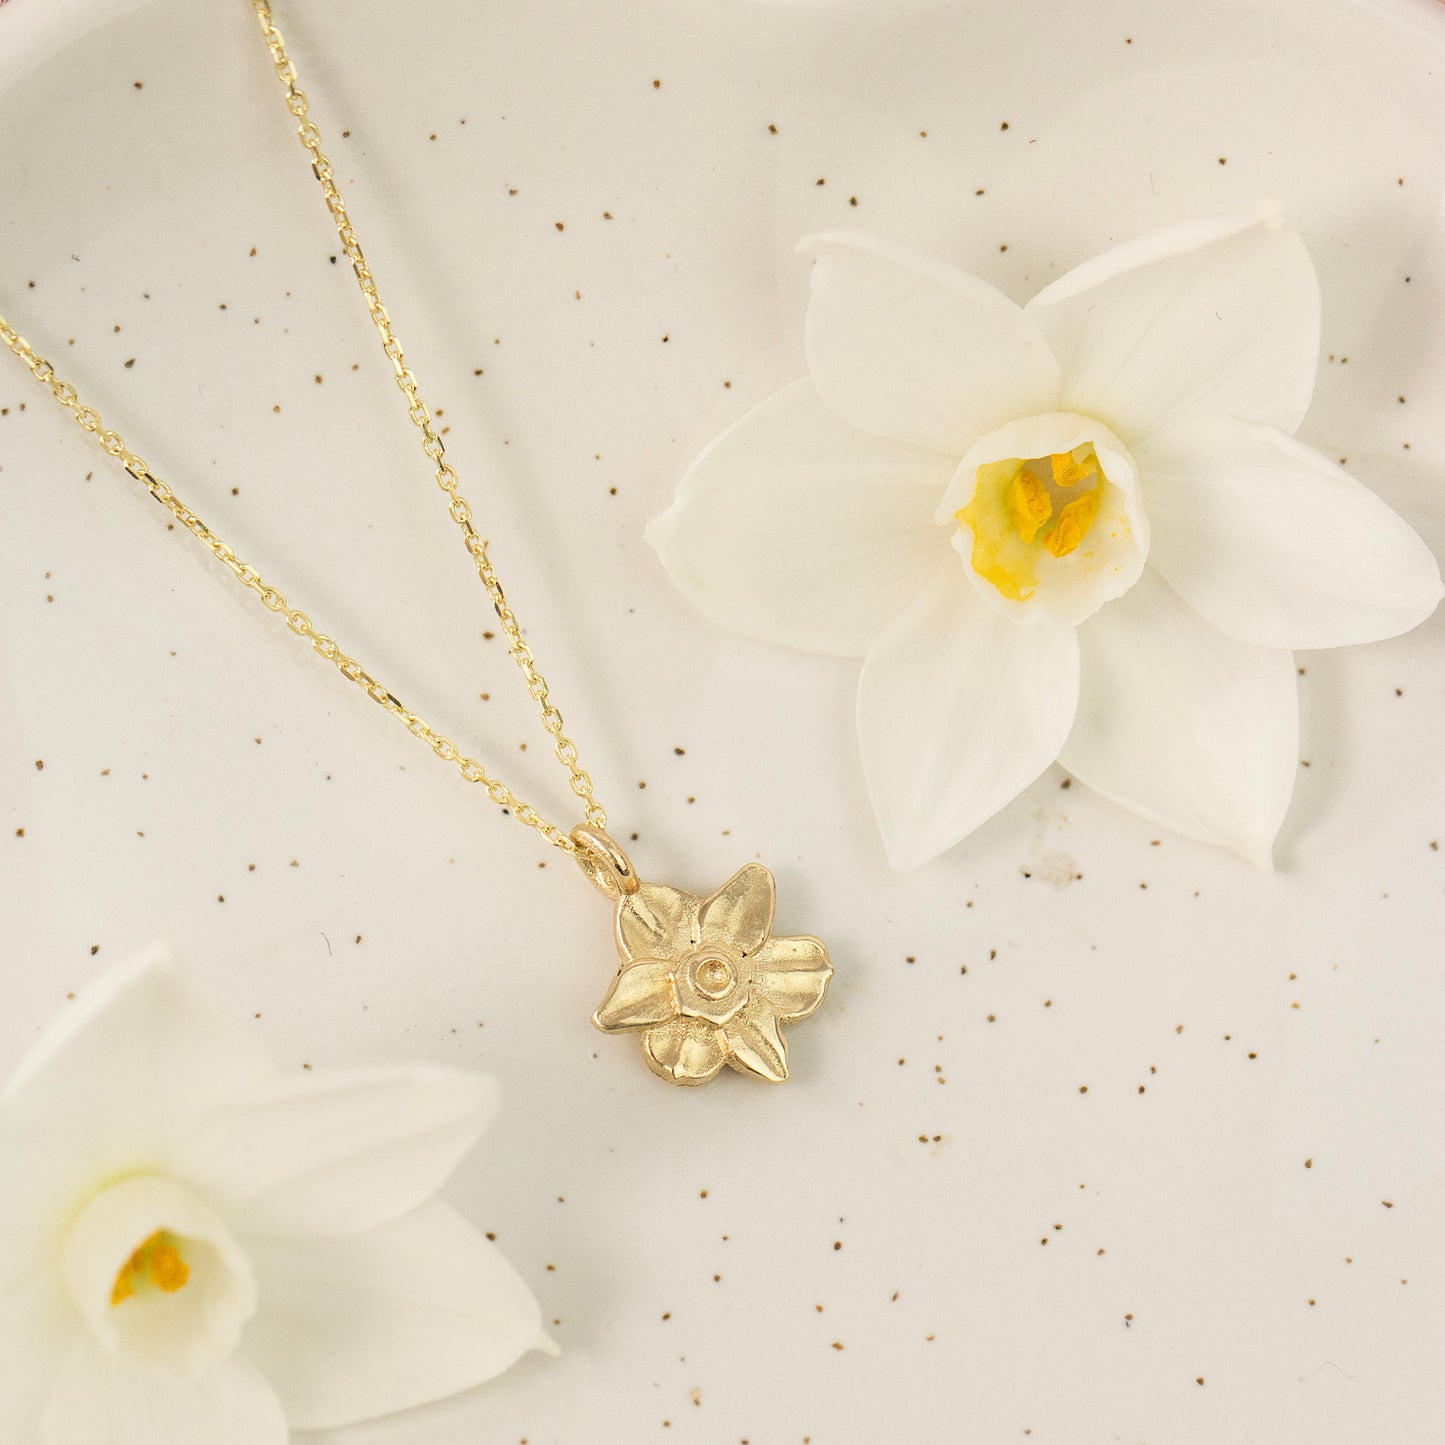 Daffodil Flower Necklace - Joy - 9kt Gold